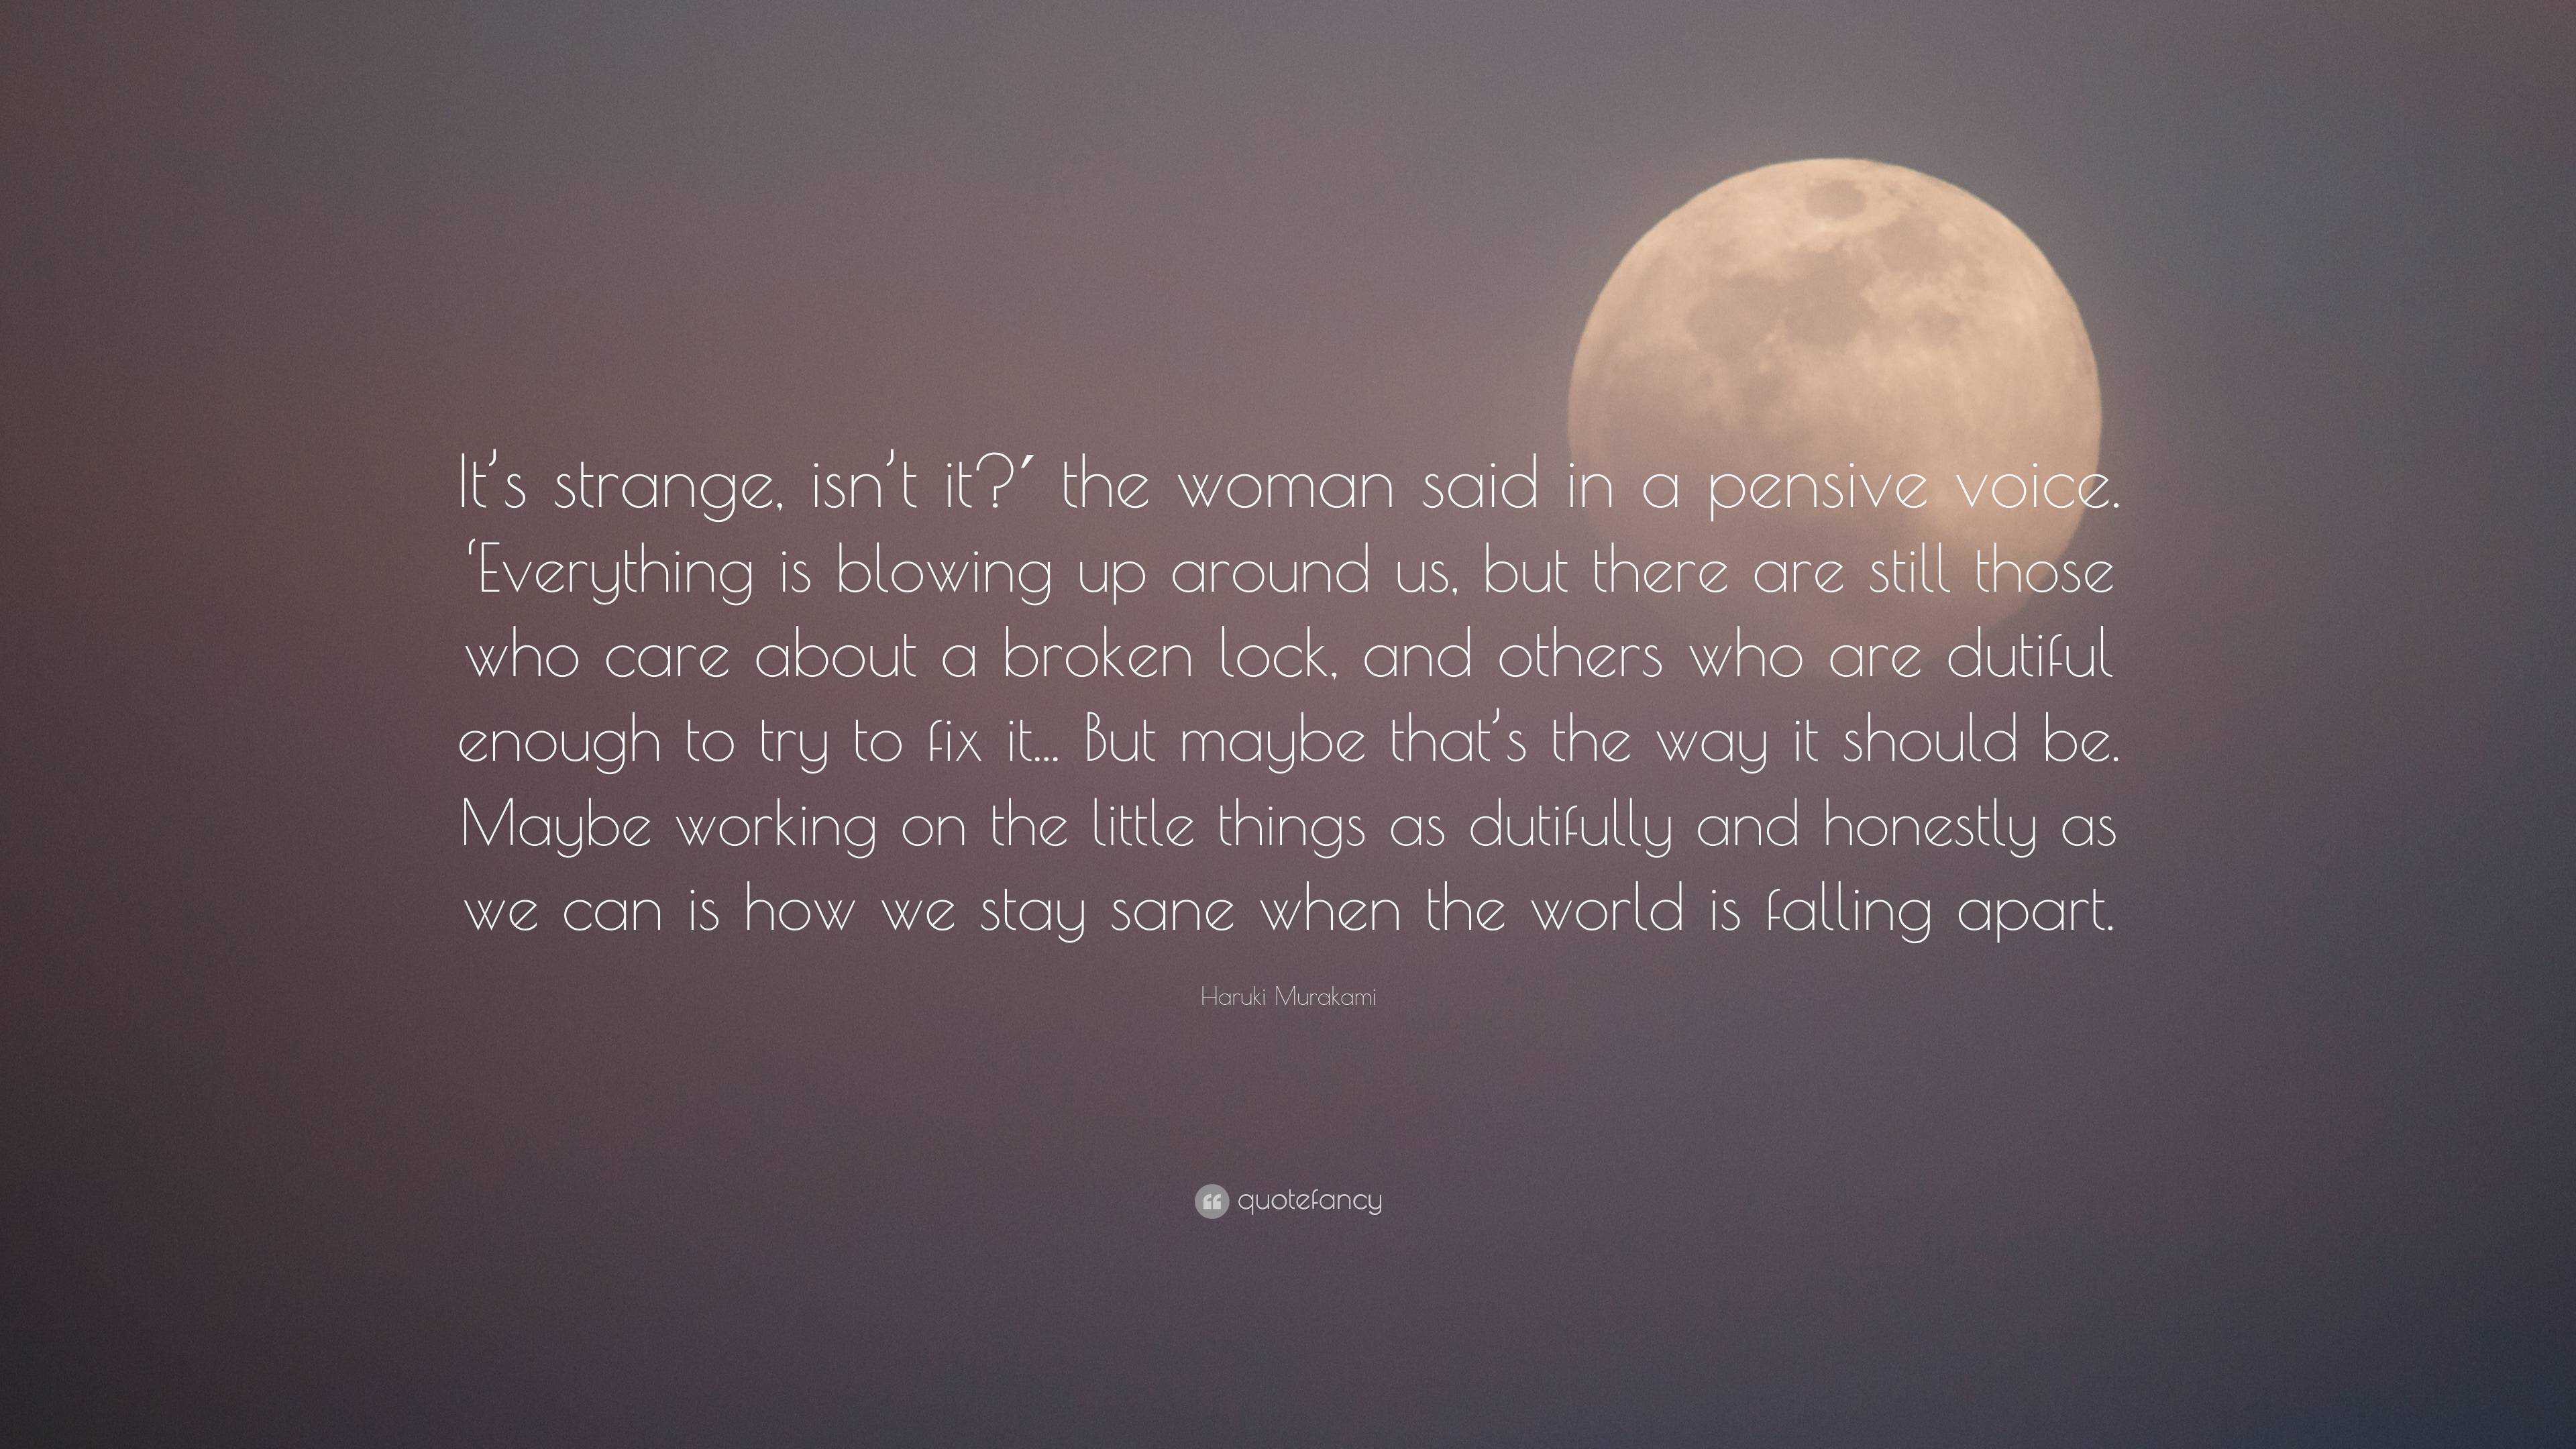 Haruki Murakami Quote: “It's strange, isn't it?′ the woman said in 